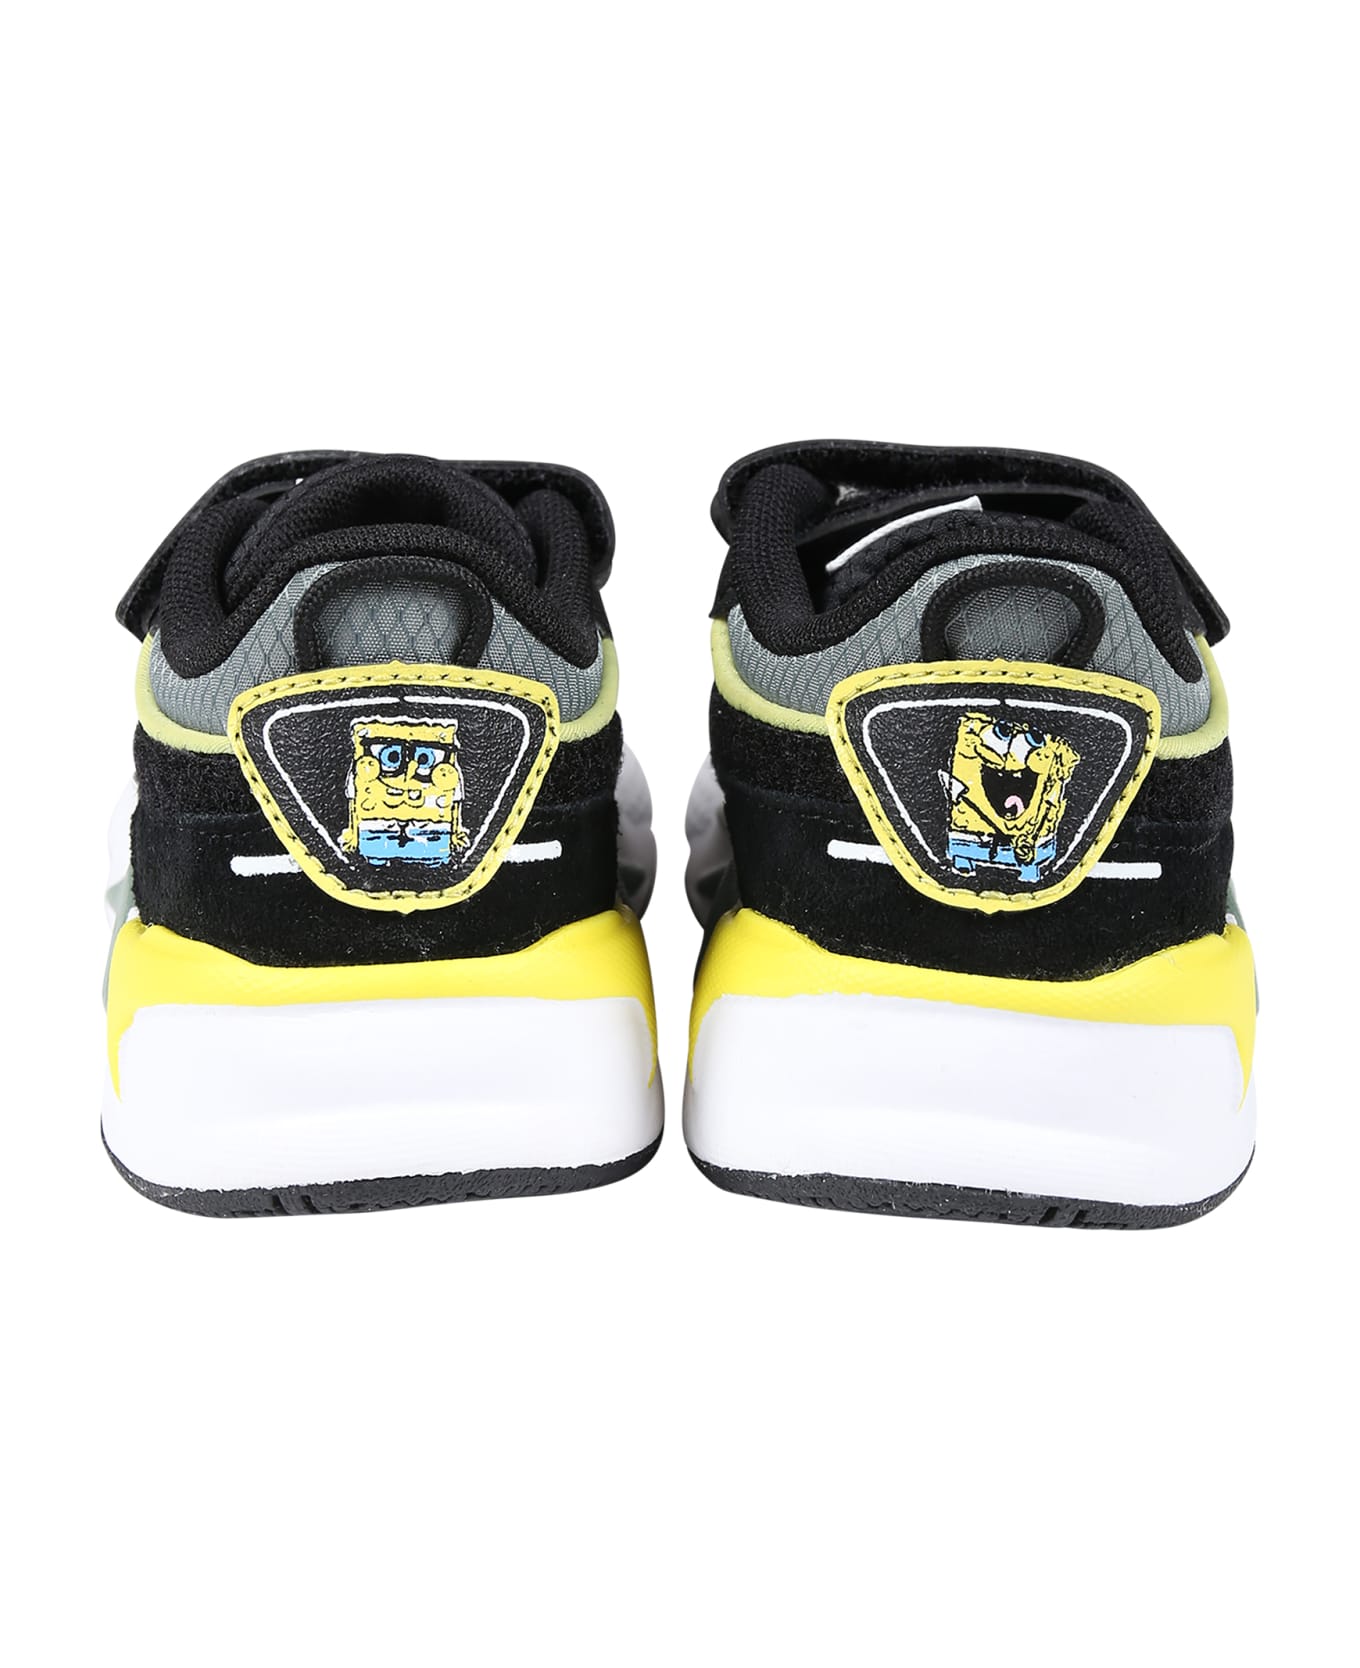 Puma Multicolor Sneakers For Boy With Logo - Black